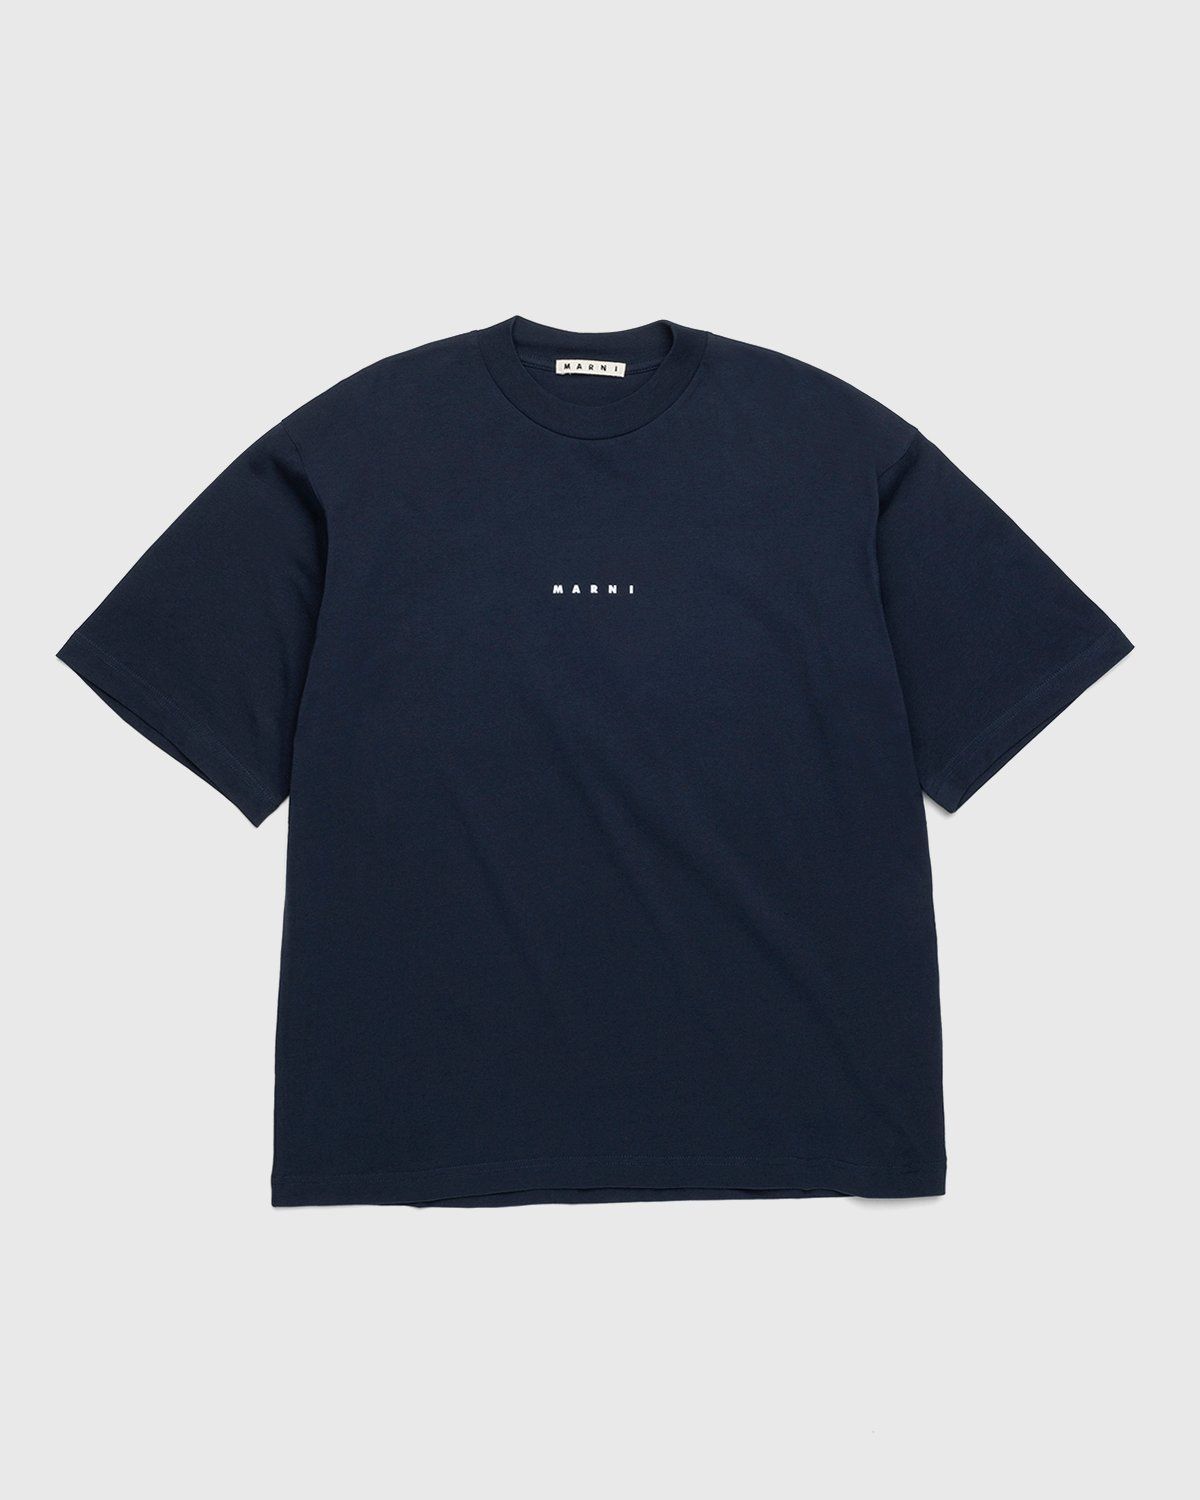 Marni – Logo T-Shirt Navy - T-Shirts - Blue - Image 1